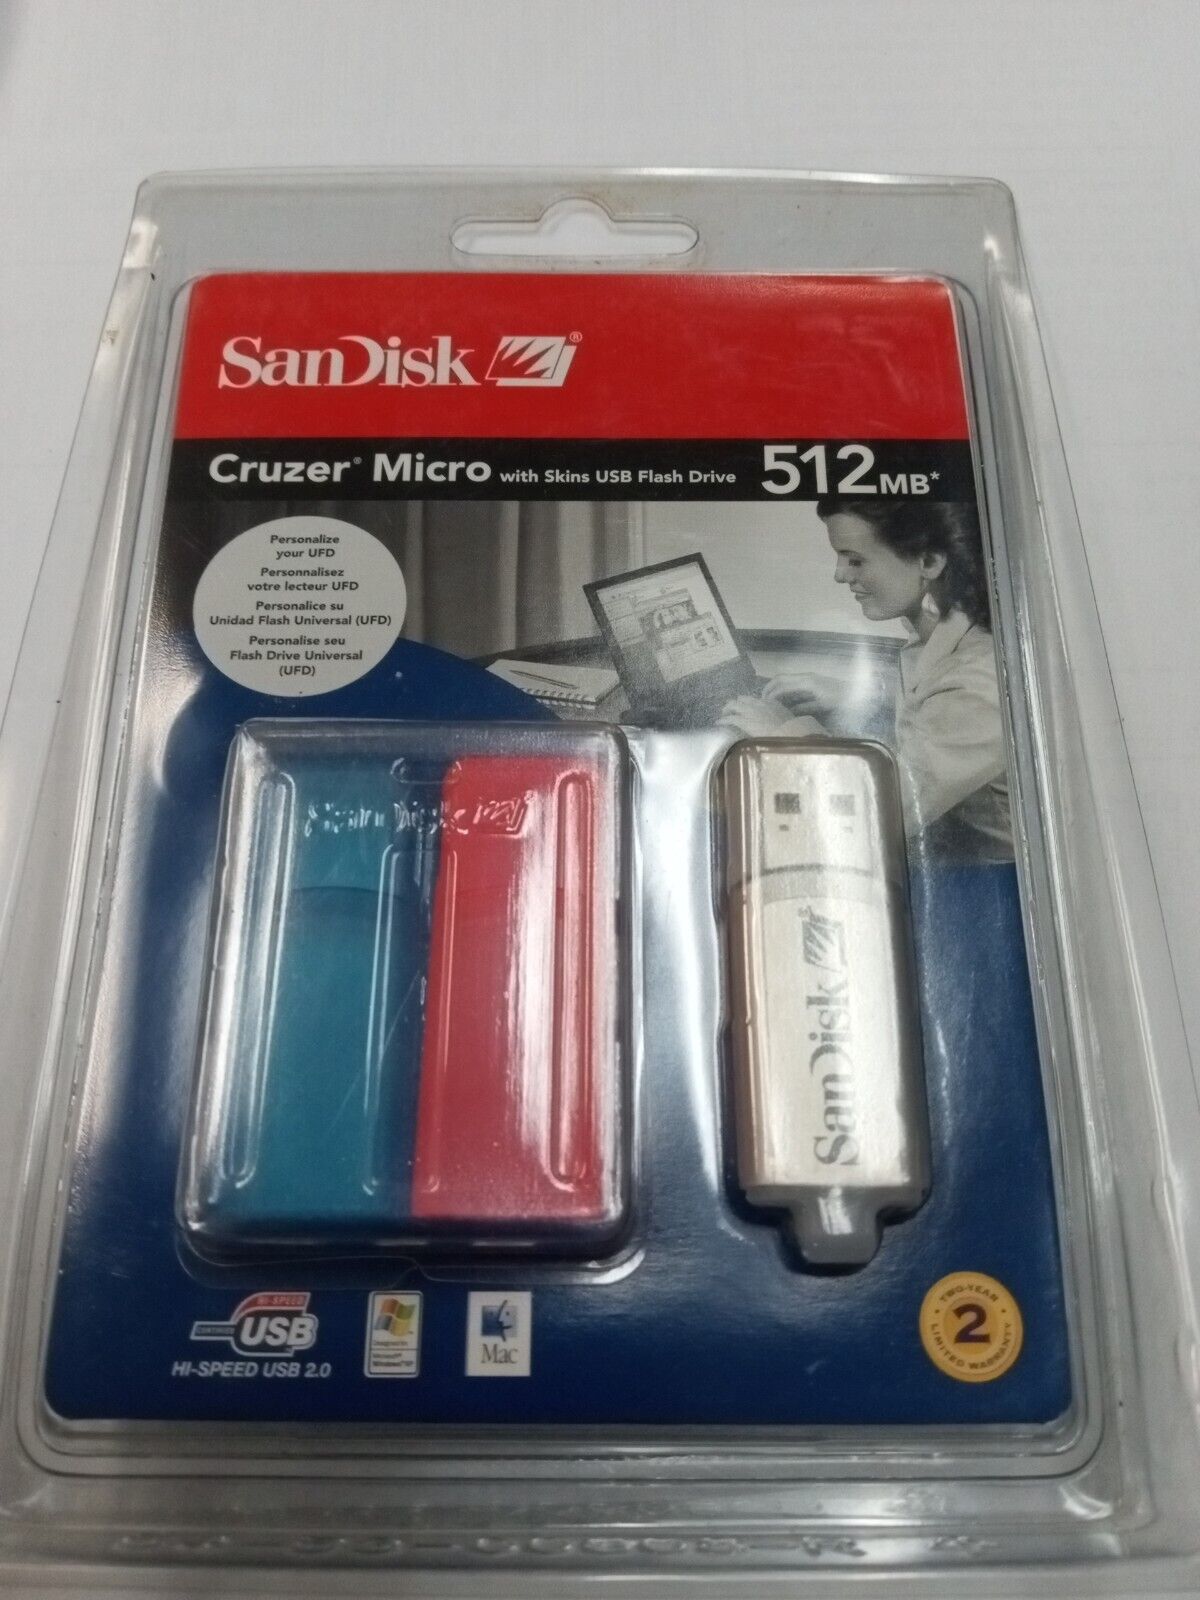 SDCZ4-512-A10 - SanDisk 512MB Cruzer Micro Flash Drive - 512 MB - USB - NEW RARE